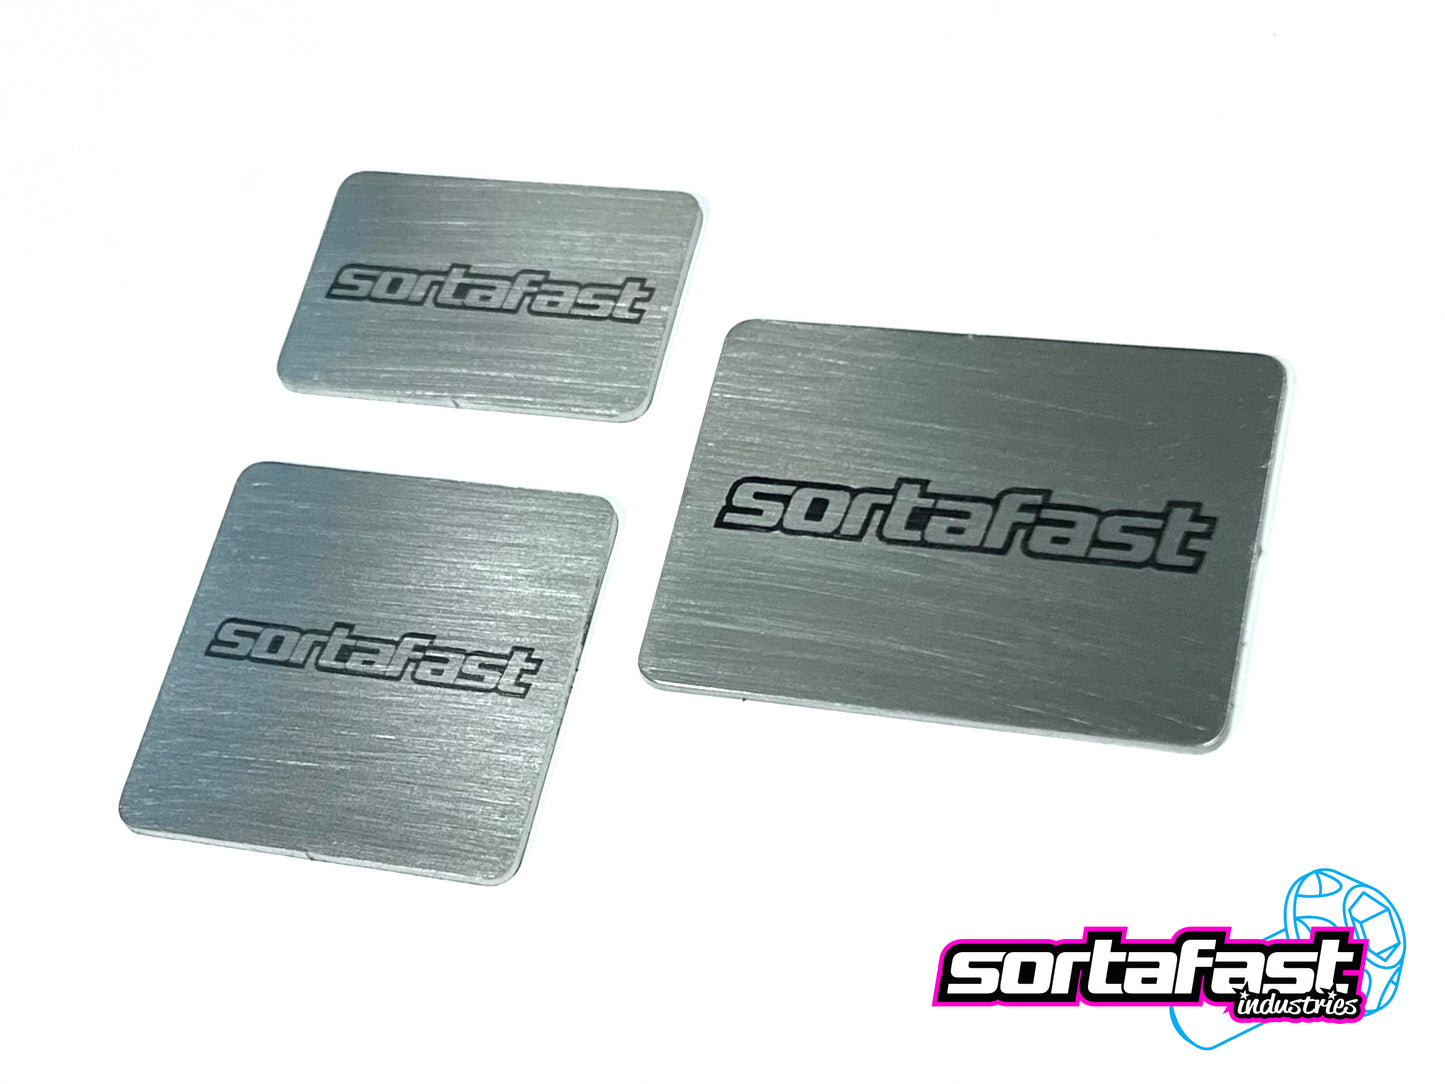 Sortafast Stainless Steel Weight Plates - Receiver / ESC